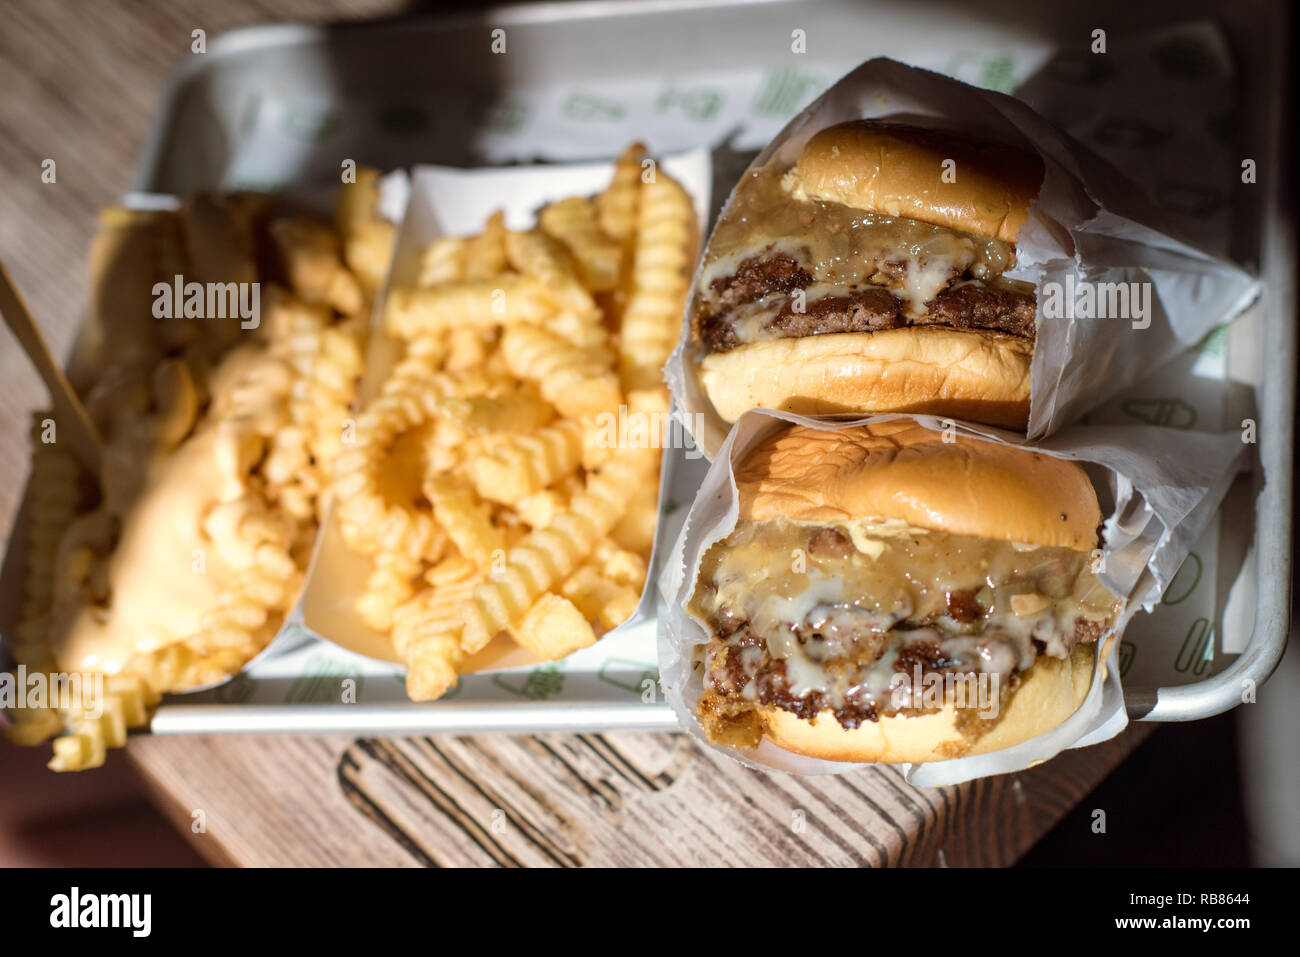 Shake Shack Burger and Fries. Stock Photo